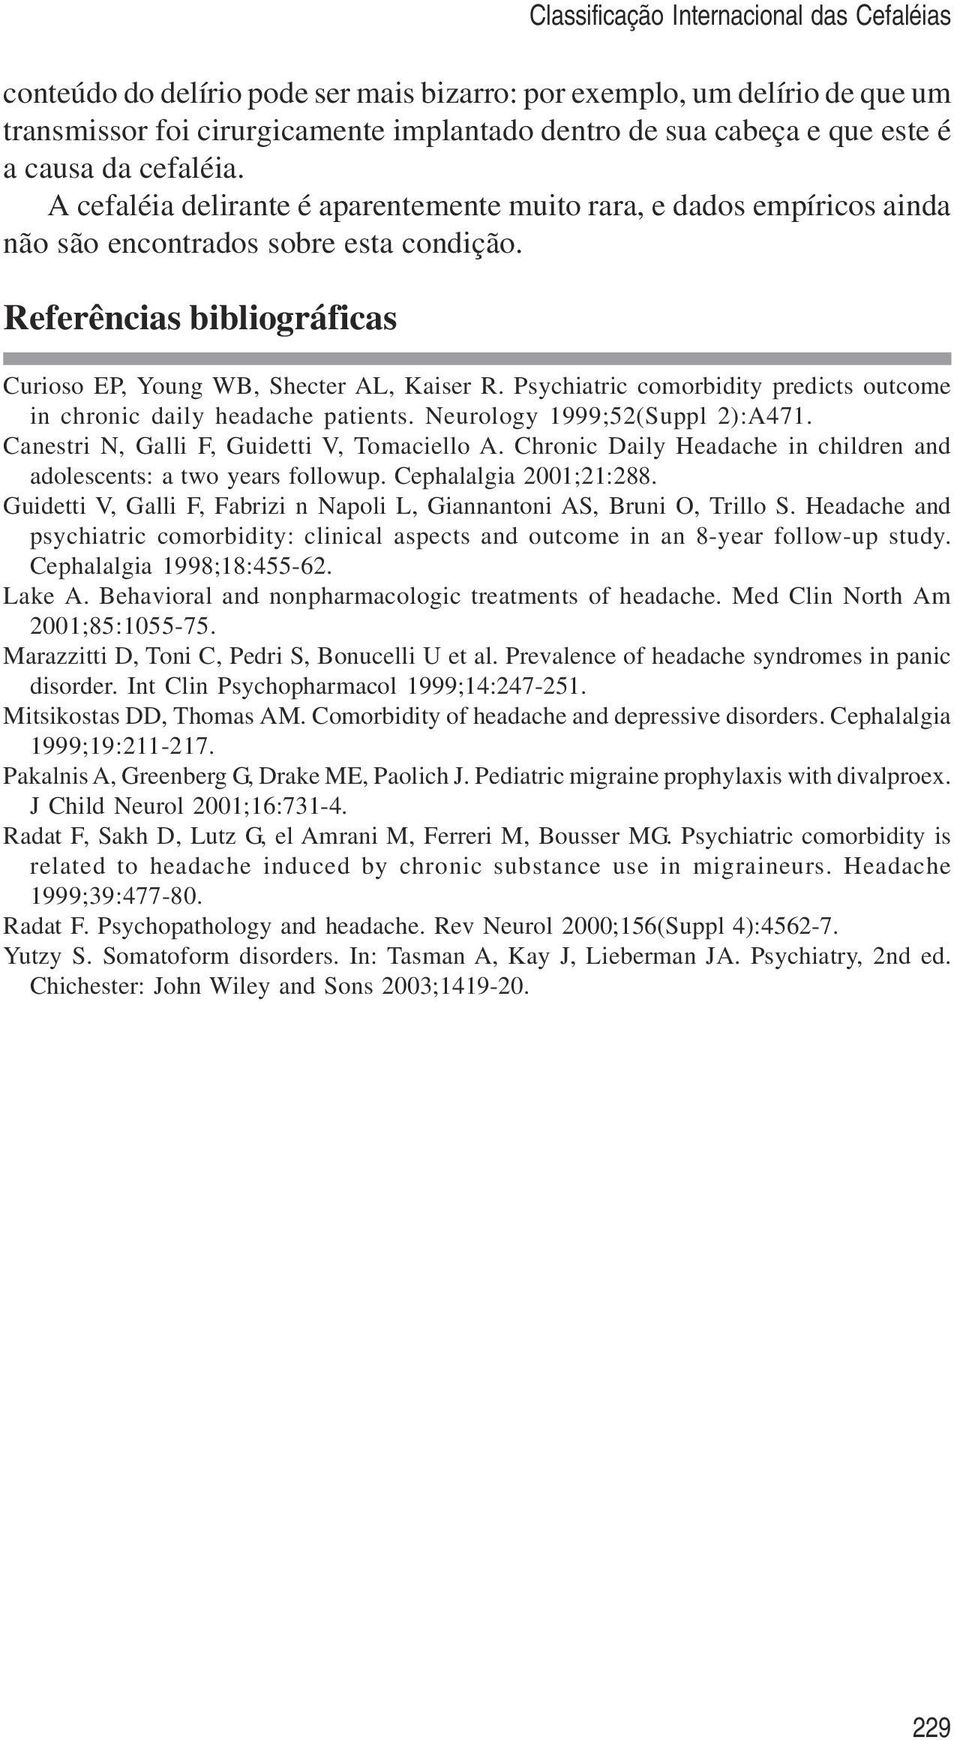 Referências bibliográficas Curioso EP, Young WB, Shecter AL, Kaiser R. Psychiatric comorbidity predicts outcome in chronic daily headache patients. Neurology 1999;52(Suppl 2):A471.